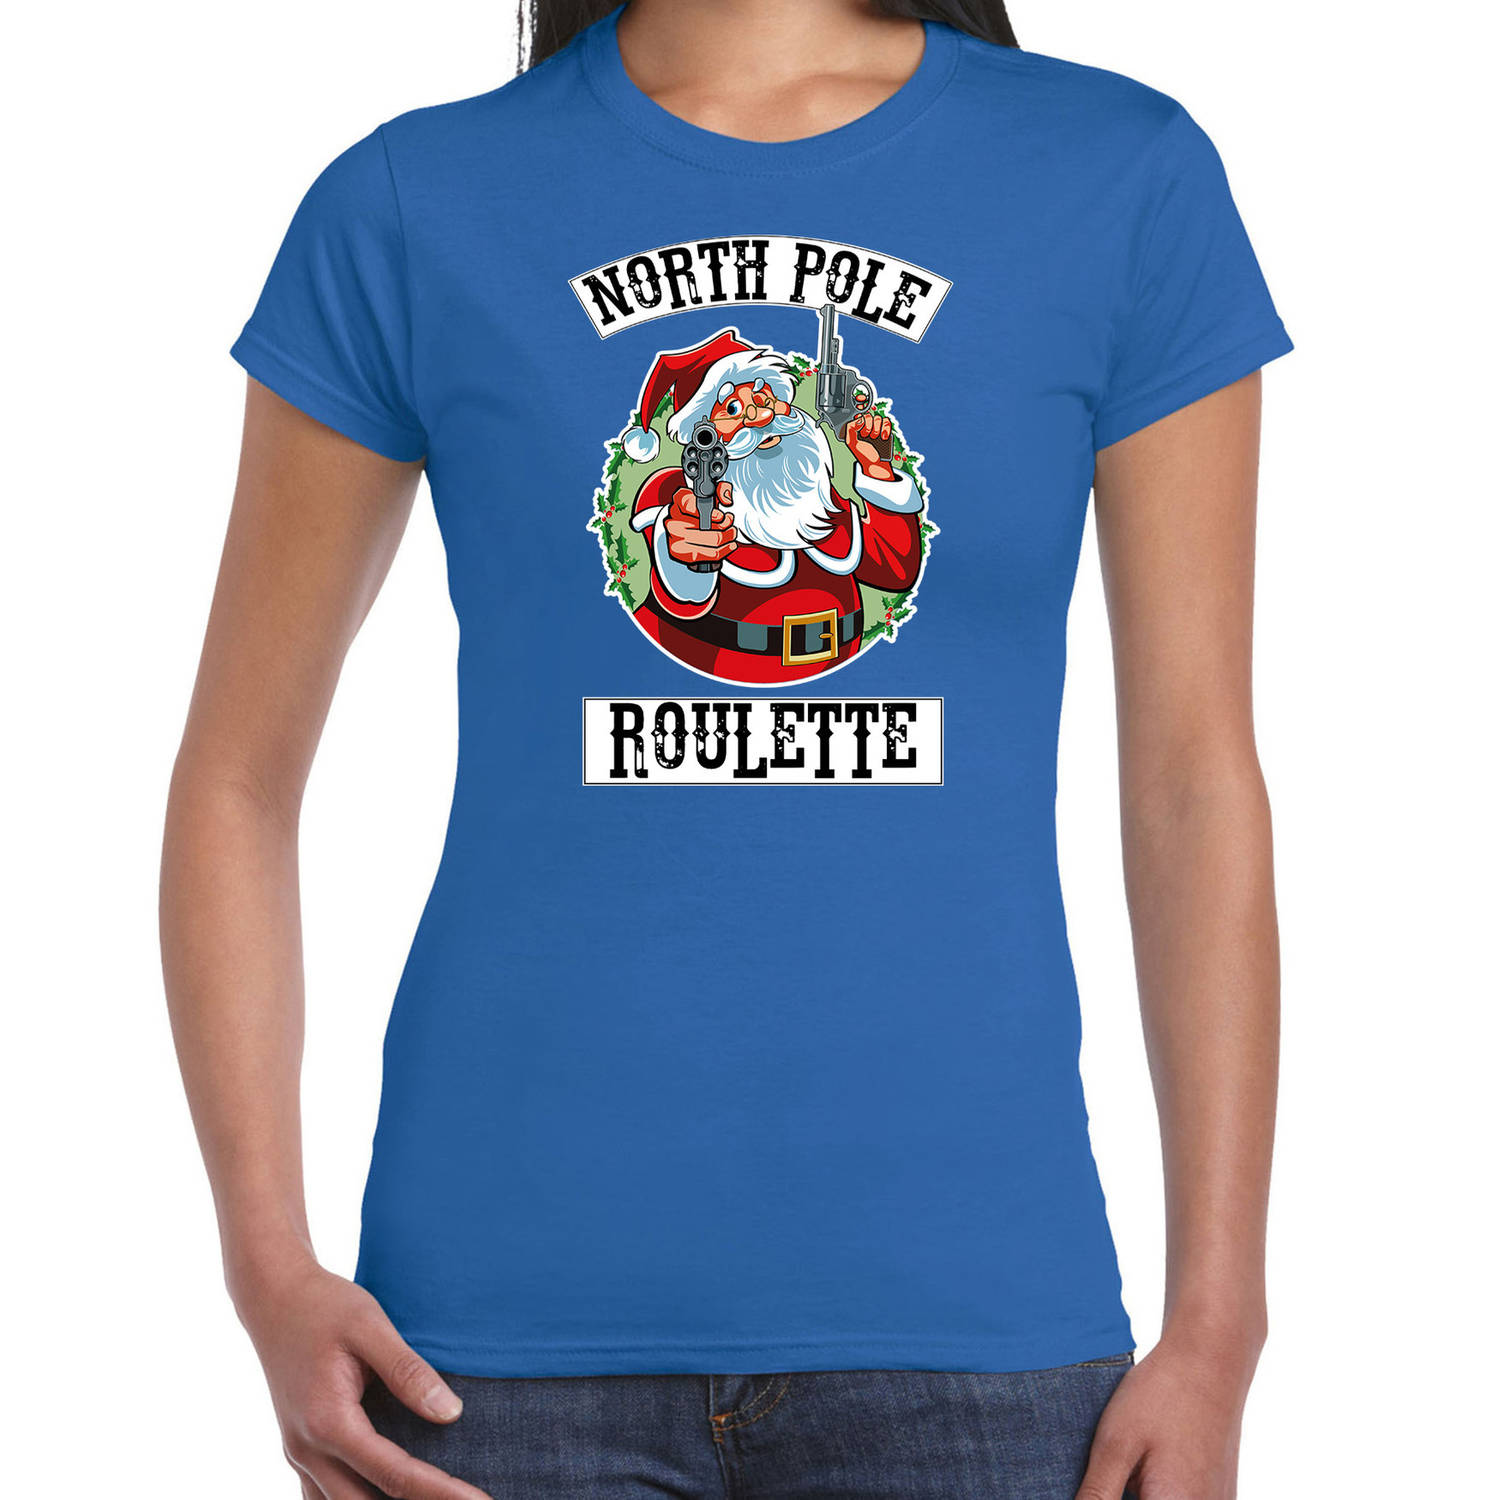 Blauw Kerstshirt / Kerstkleding Northpole roulette voor dames 2XL - kerst t-shirts